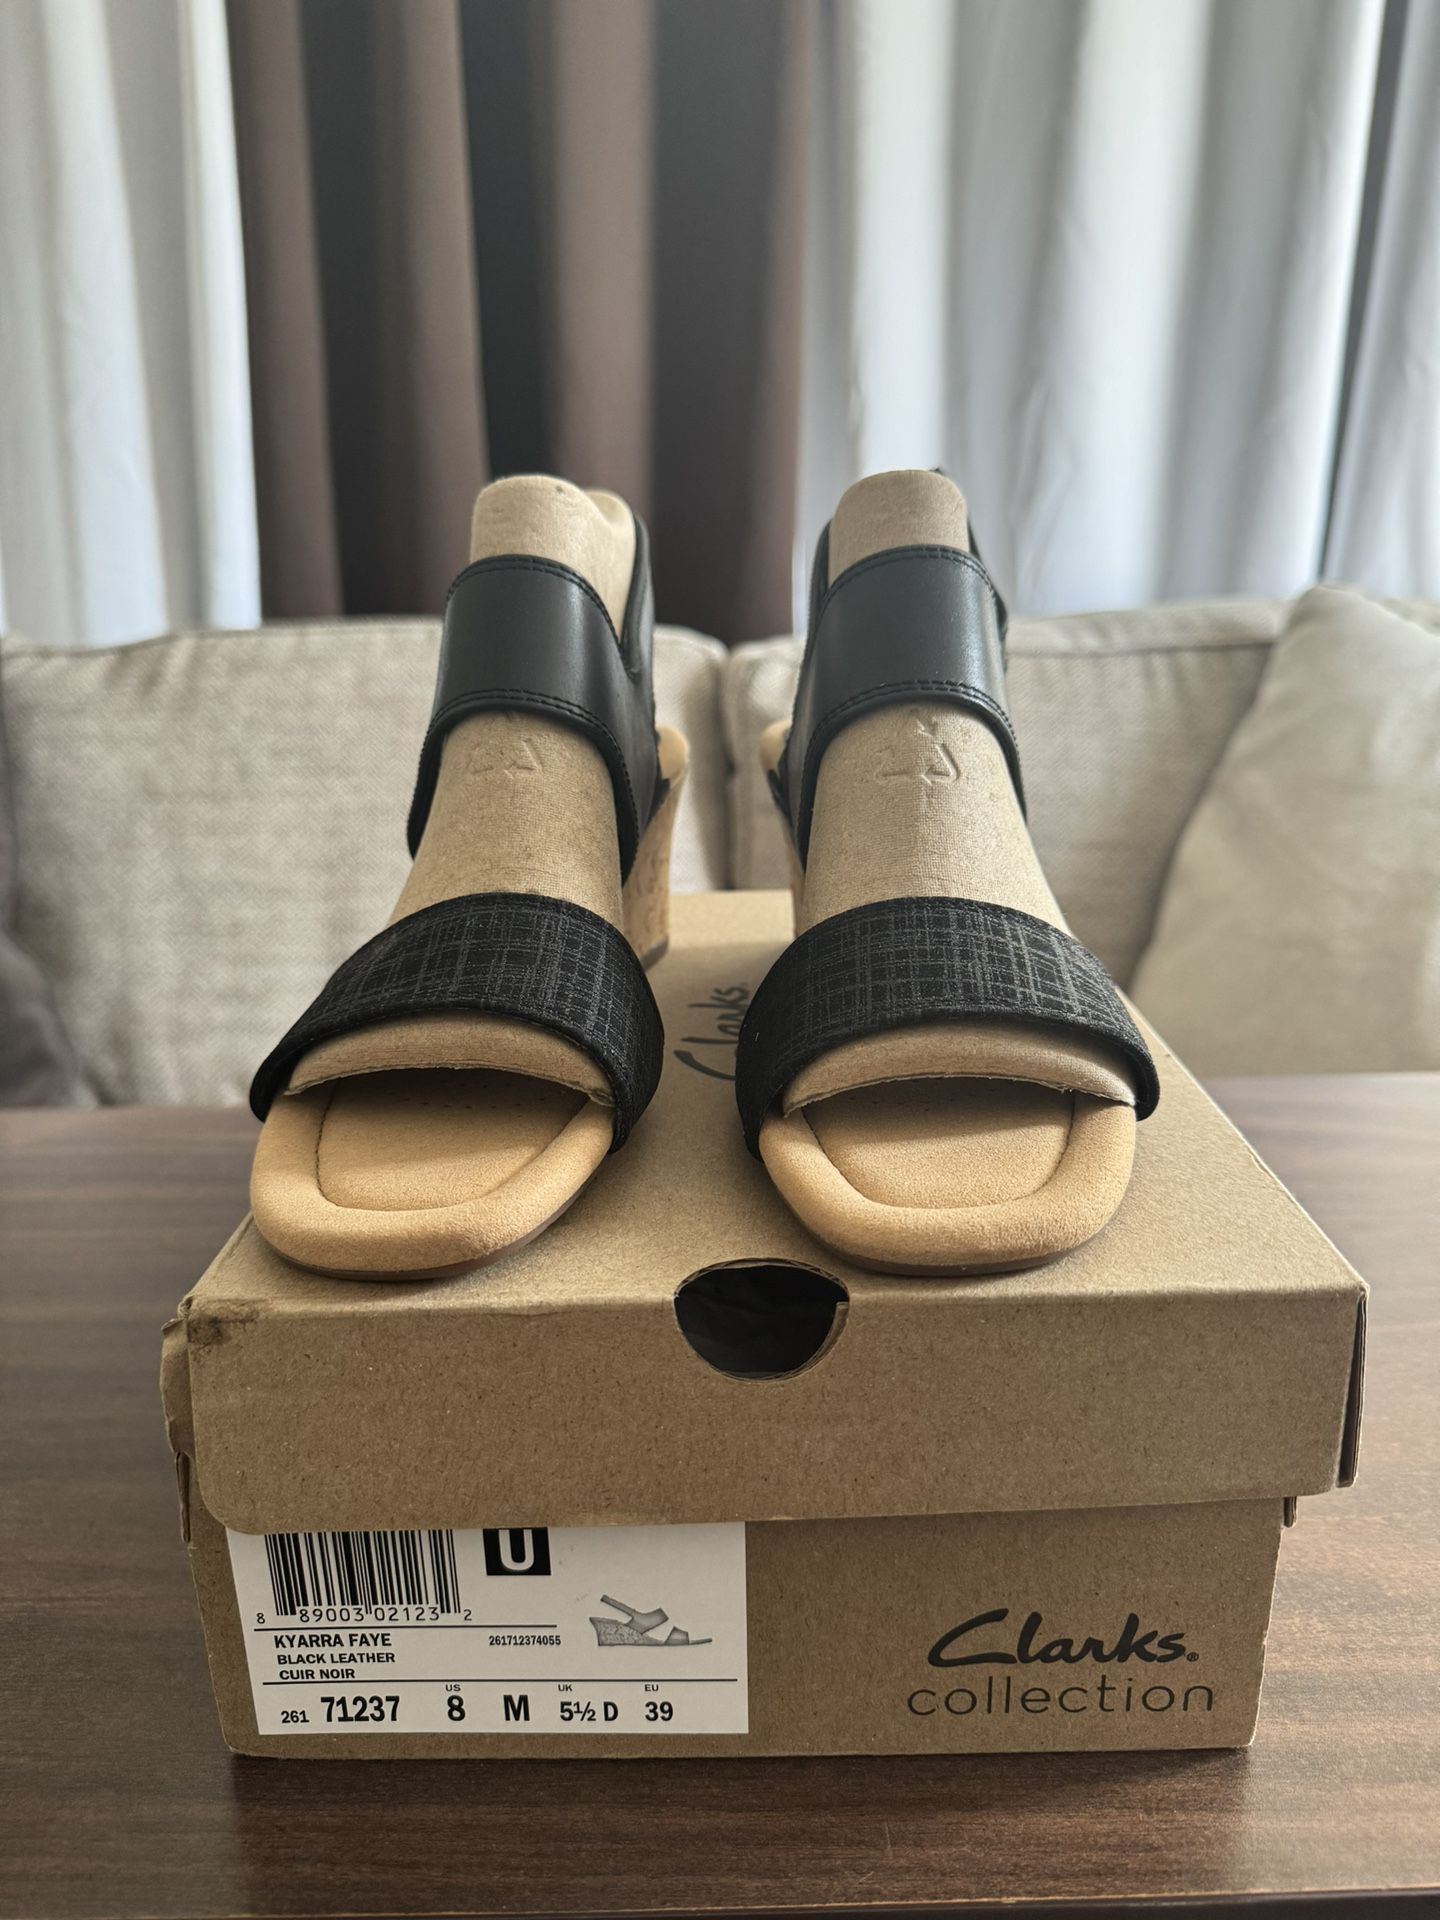 Clarks wedge sandals Size 8M